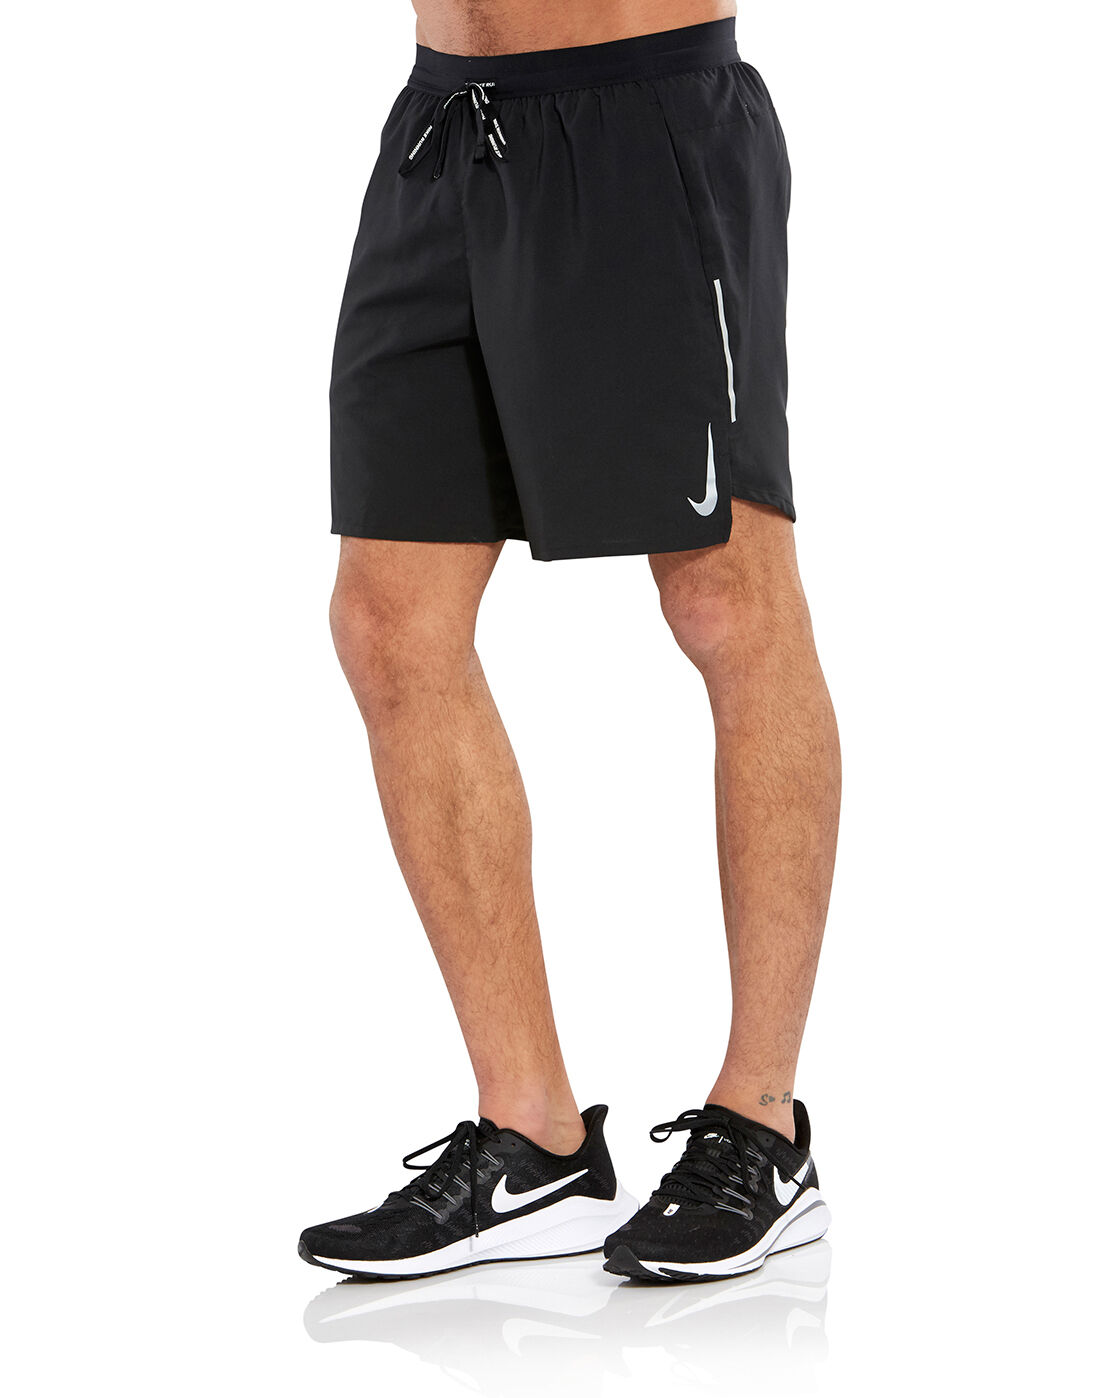 nike mens running shorts 7 inch